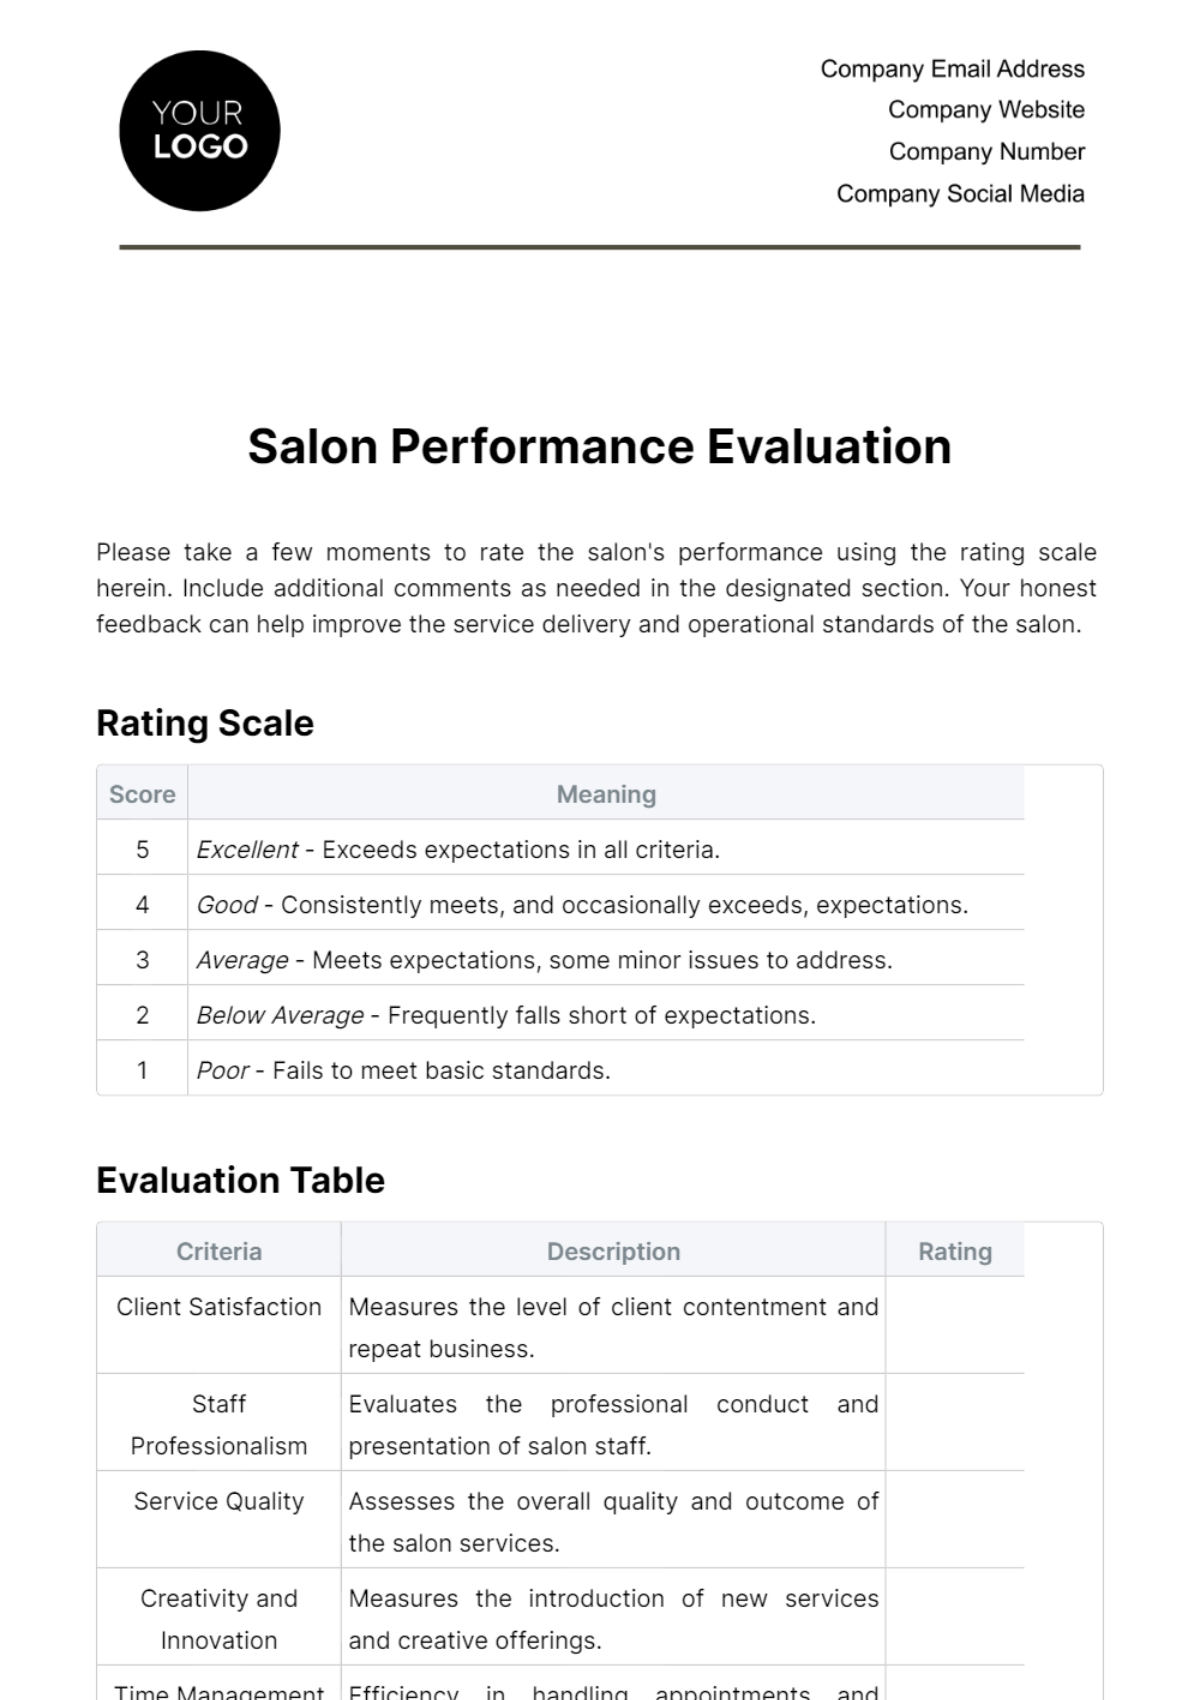 Salon Performance Evaluation Template